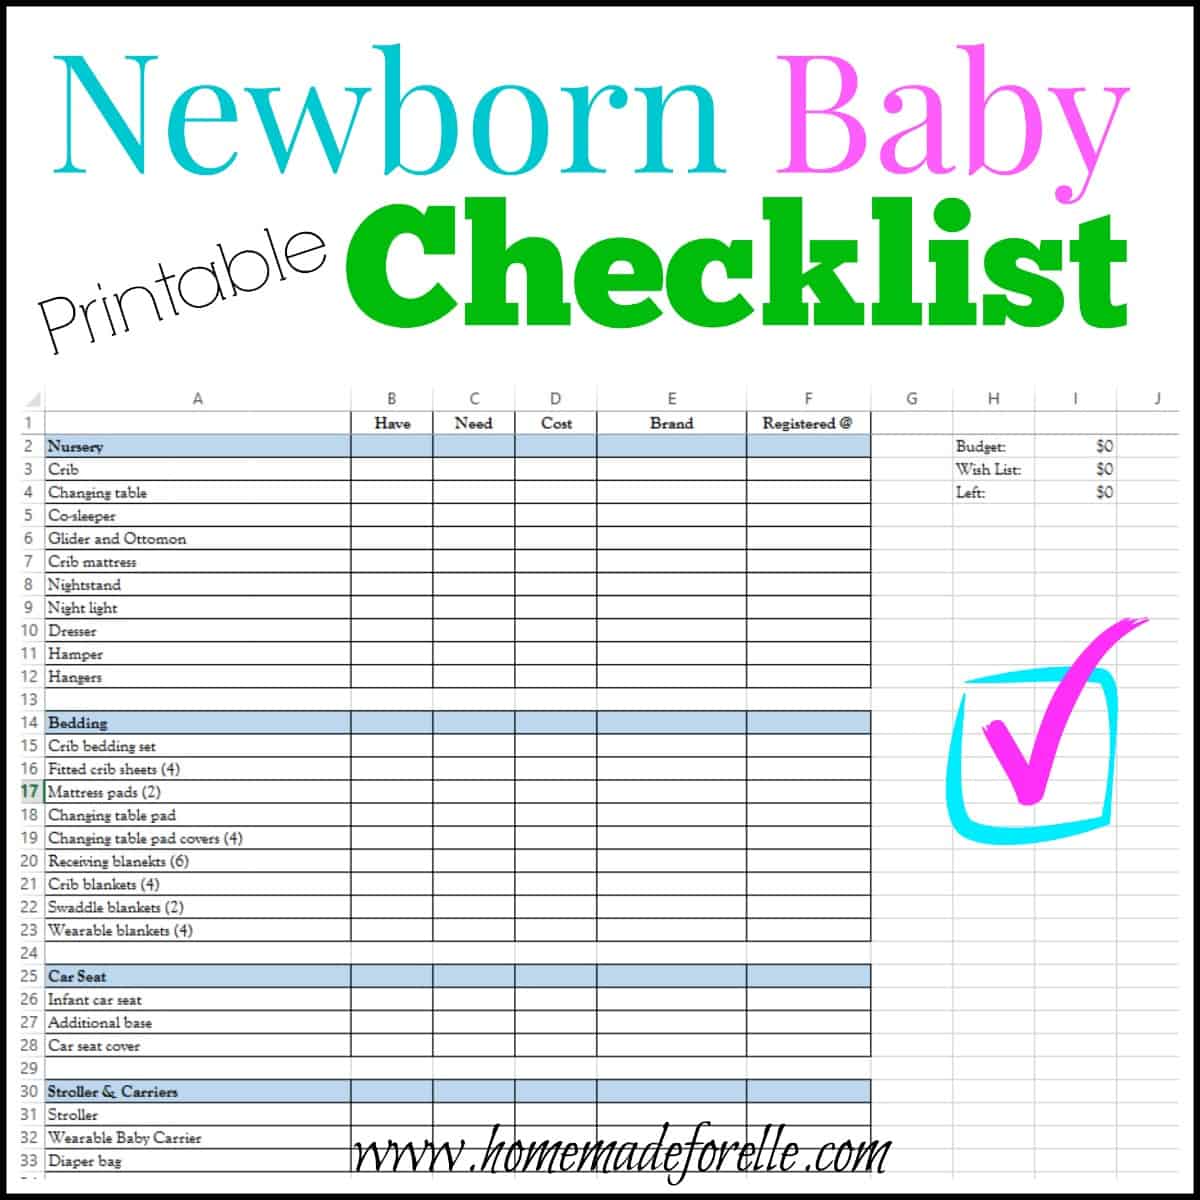 shopping list for newborn